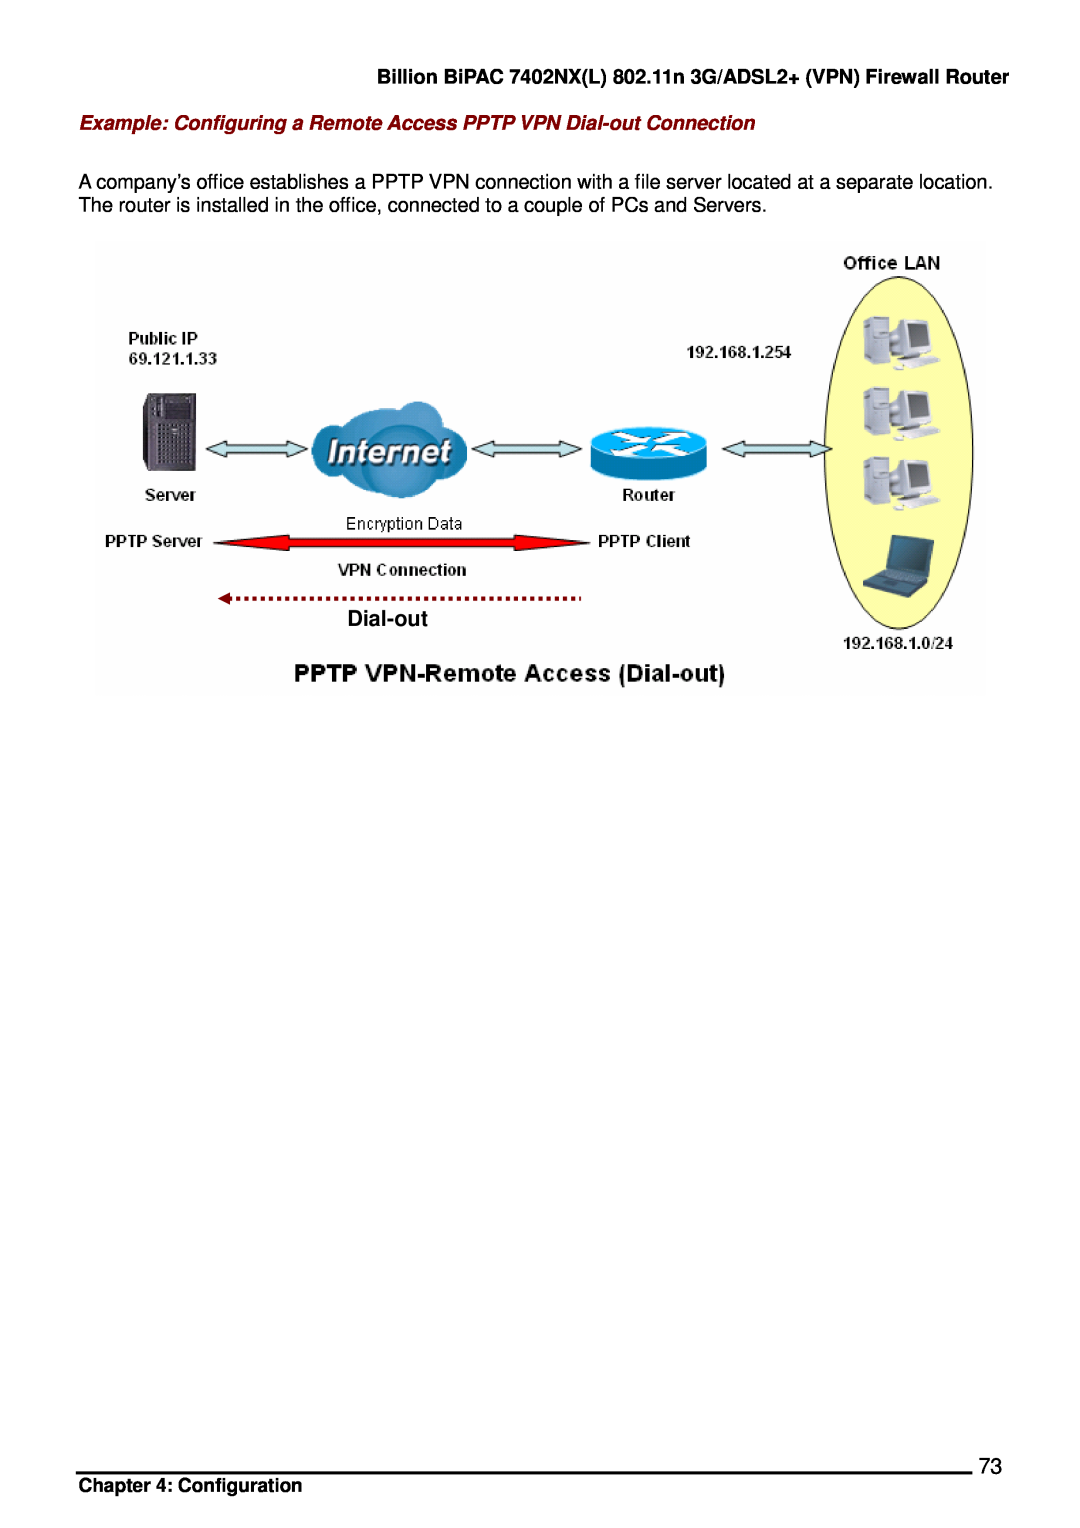 Billion Electric Company Dial-out, Billion BiPAC 7402NXL 802.11n 3G/ADSL2+ VPN Firewall Router, Configuration 